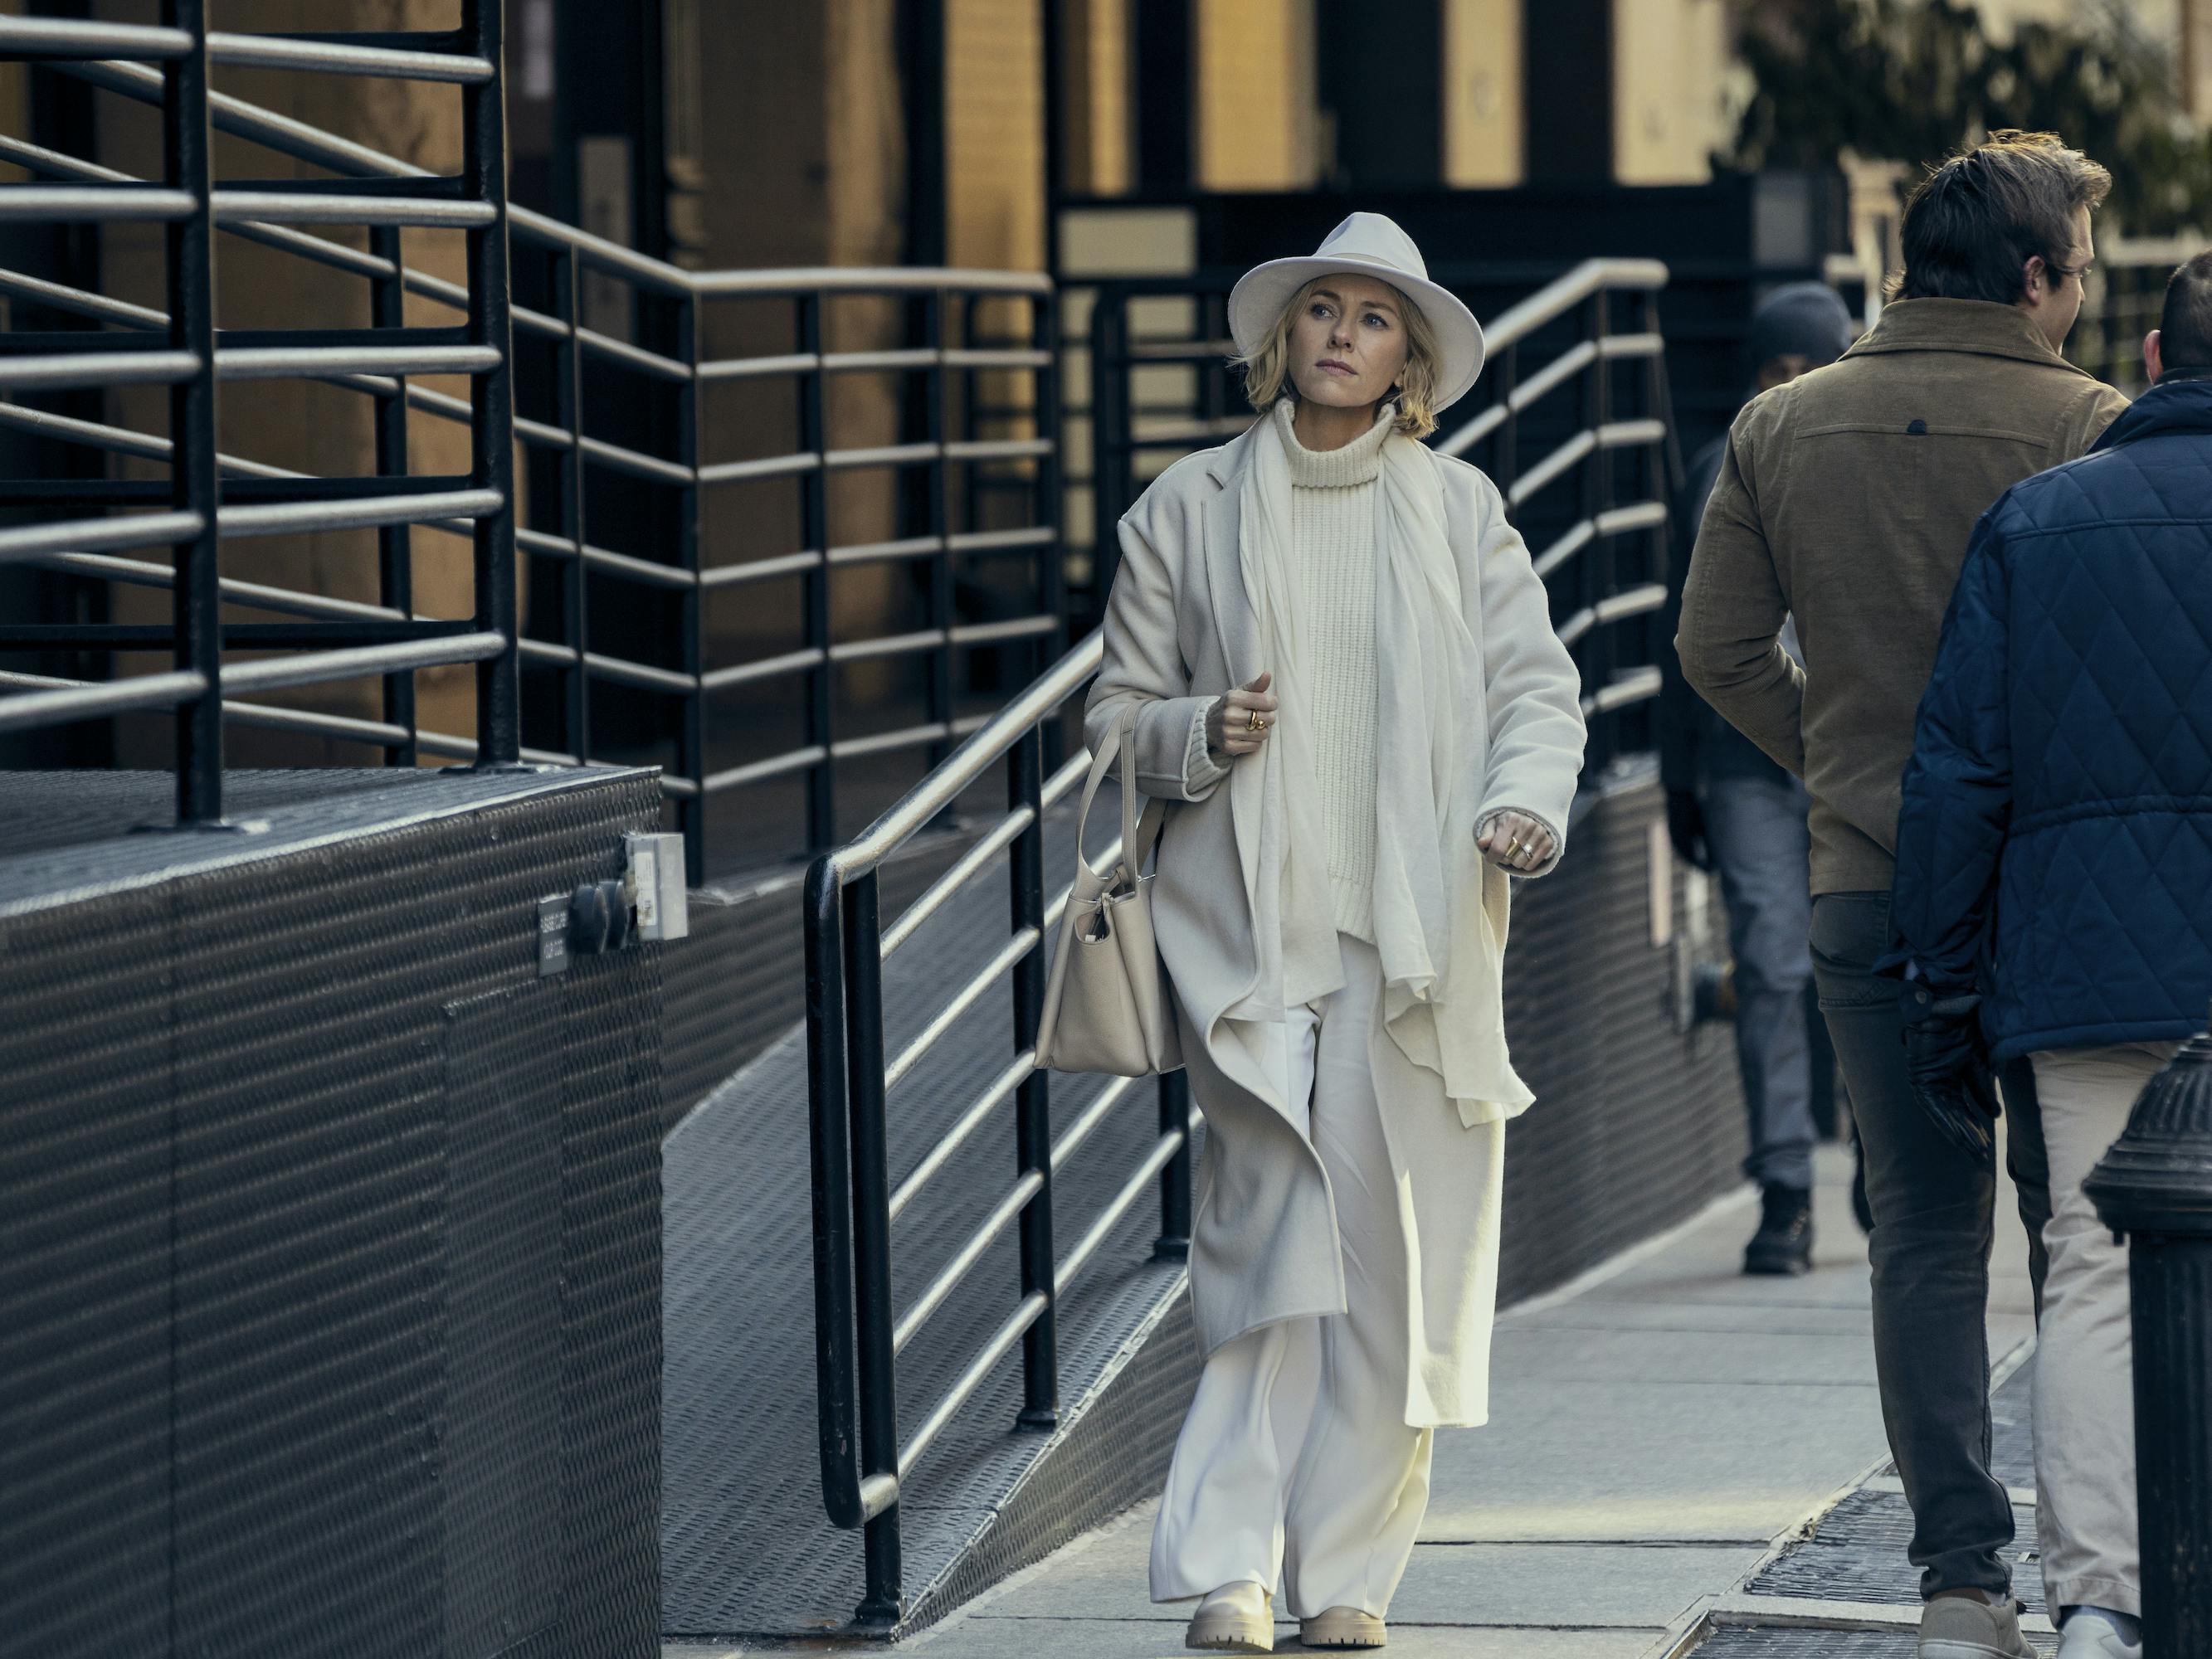 Nora Brannock (Naomi Watts) serves yet another monochromic look walking down the street.